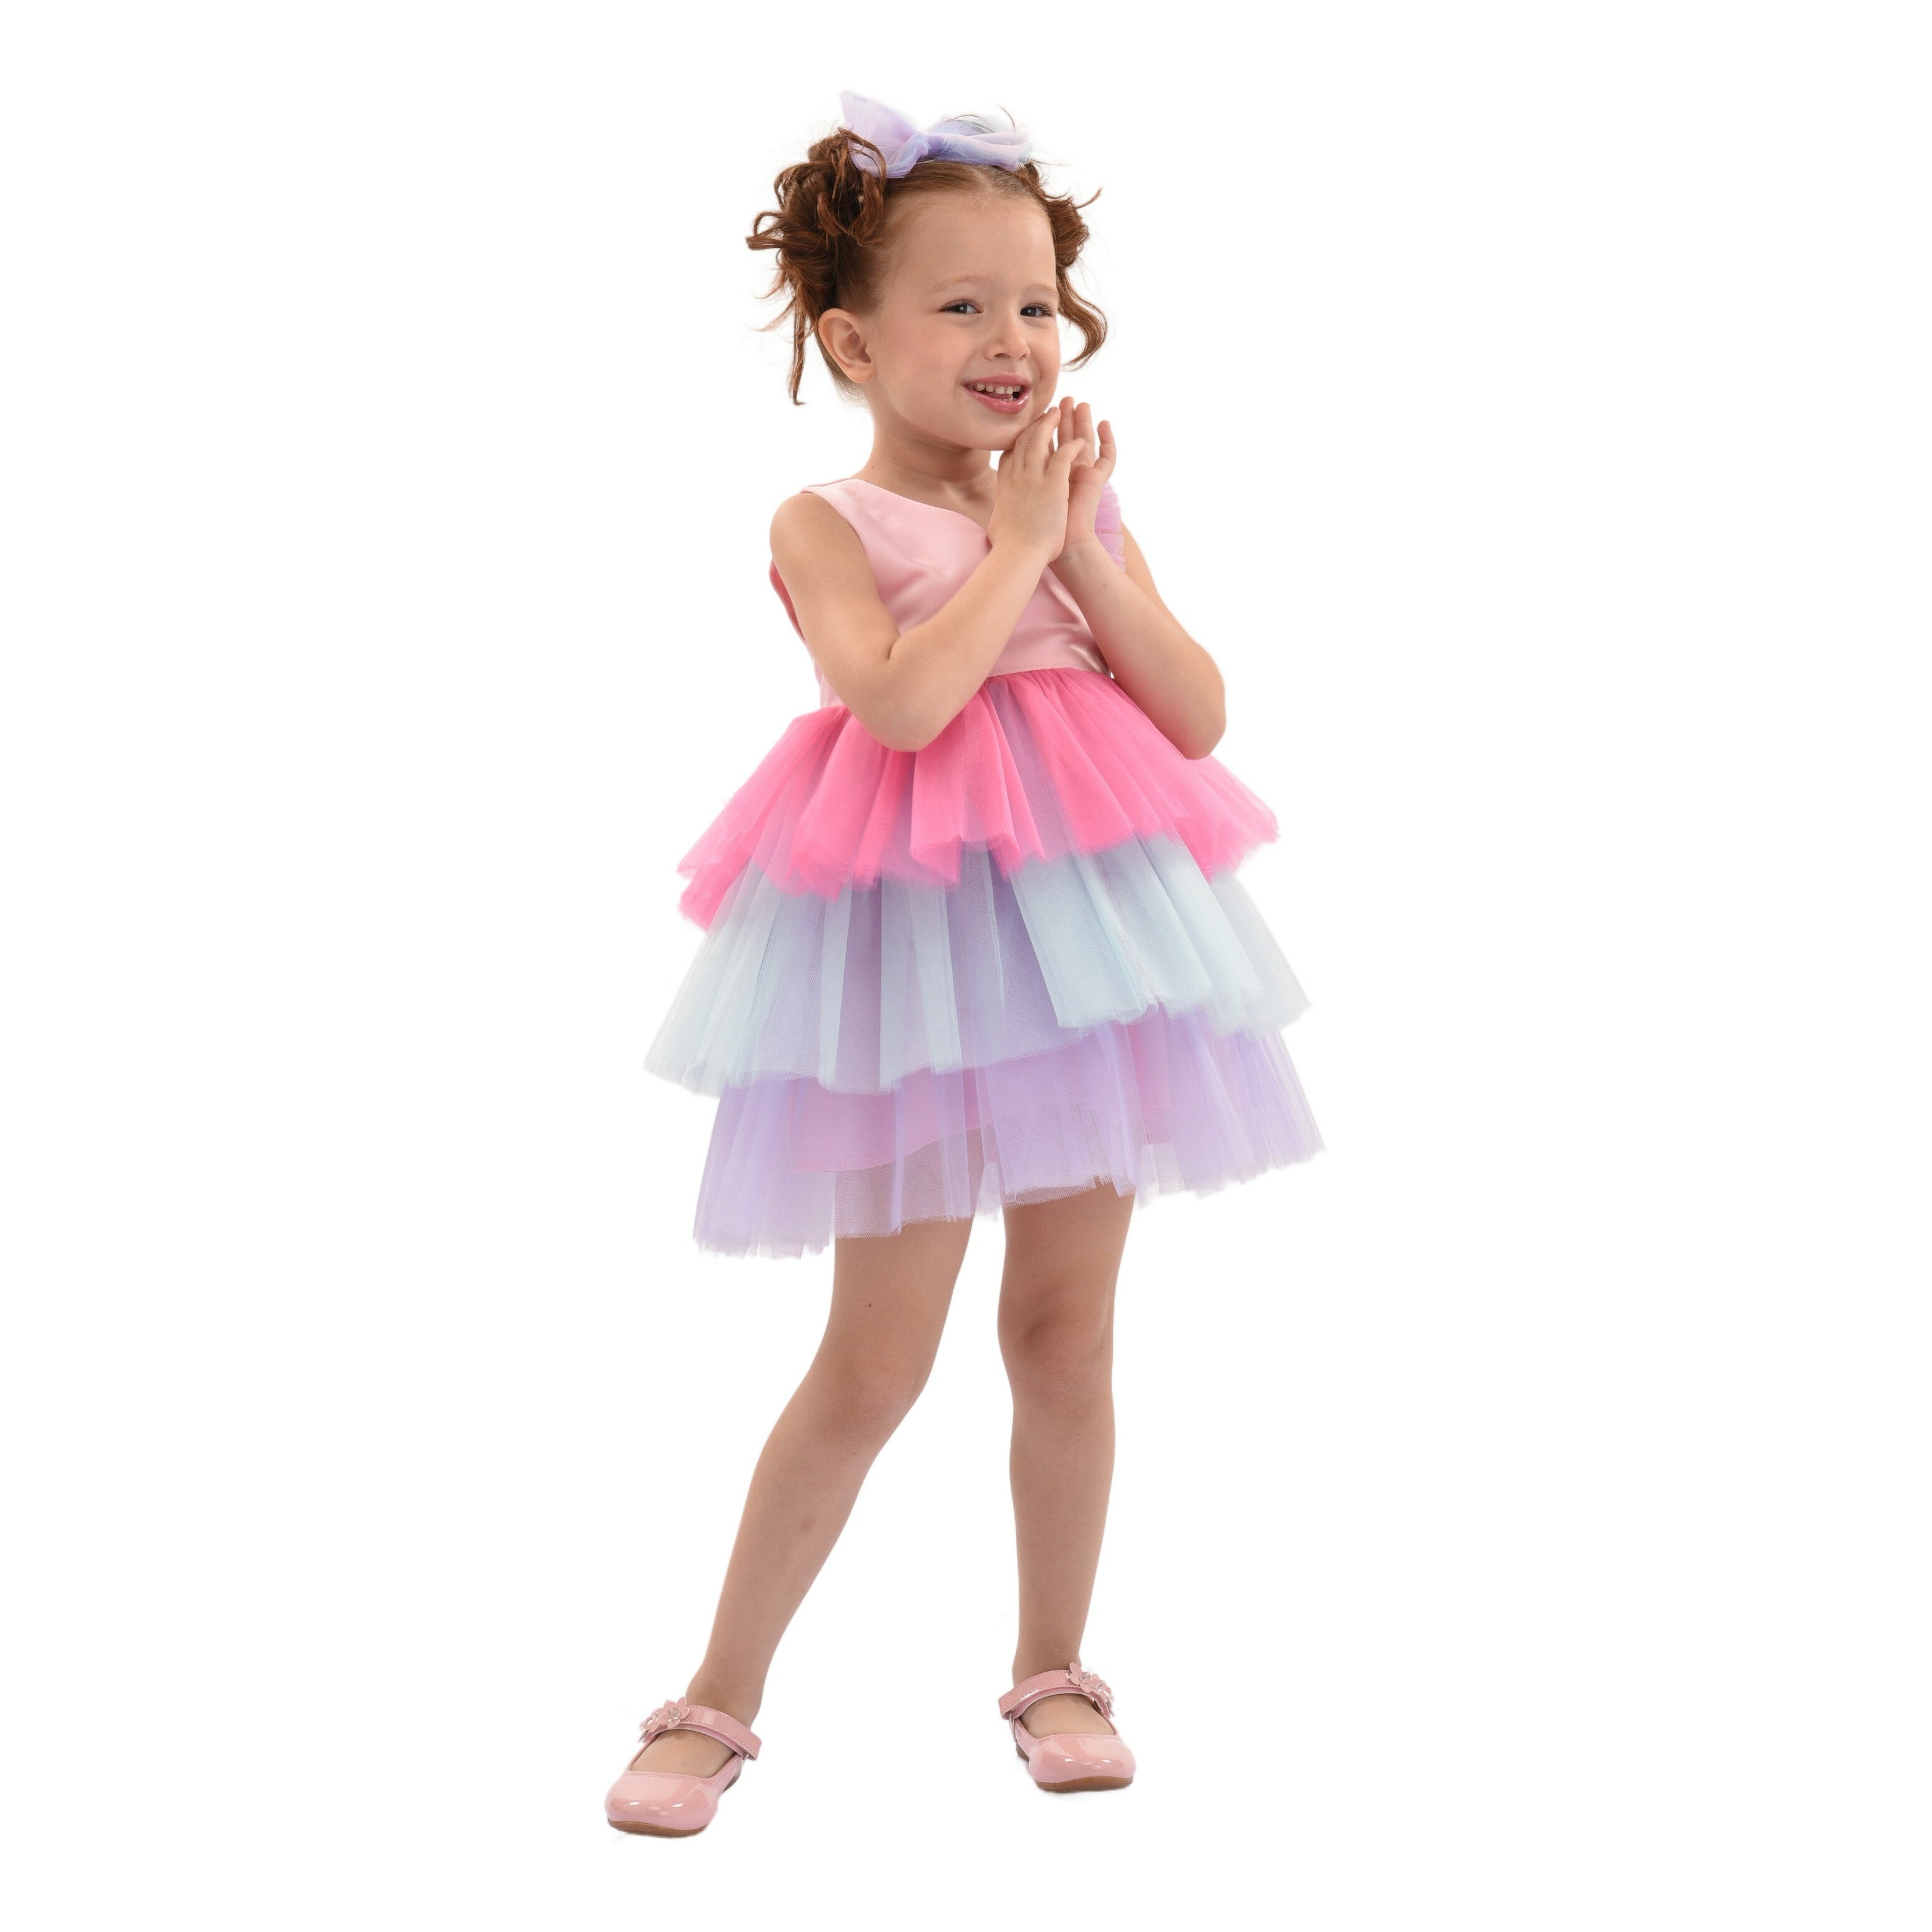 kids-atelier-mimi-tutu-kid-baby-girl-pink-cakepop-multicolor-layered-tulle-dress-pl23s734869250323